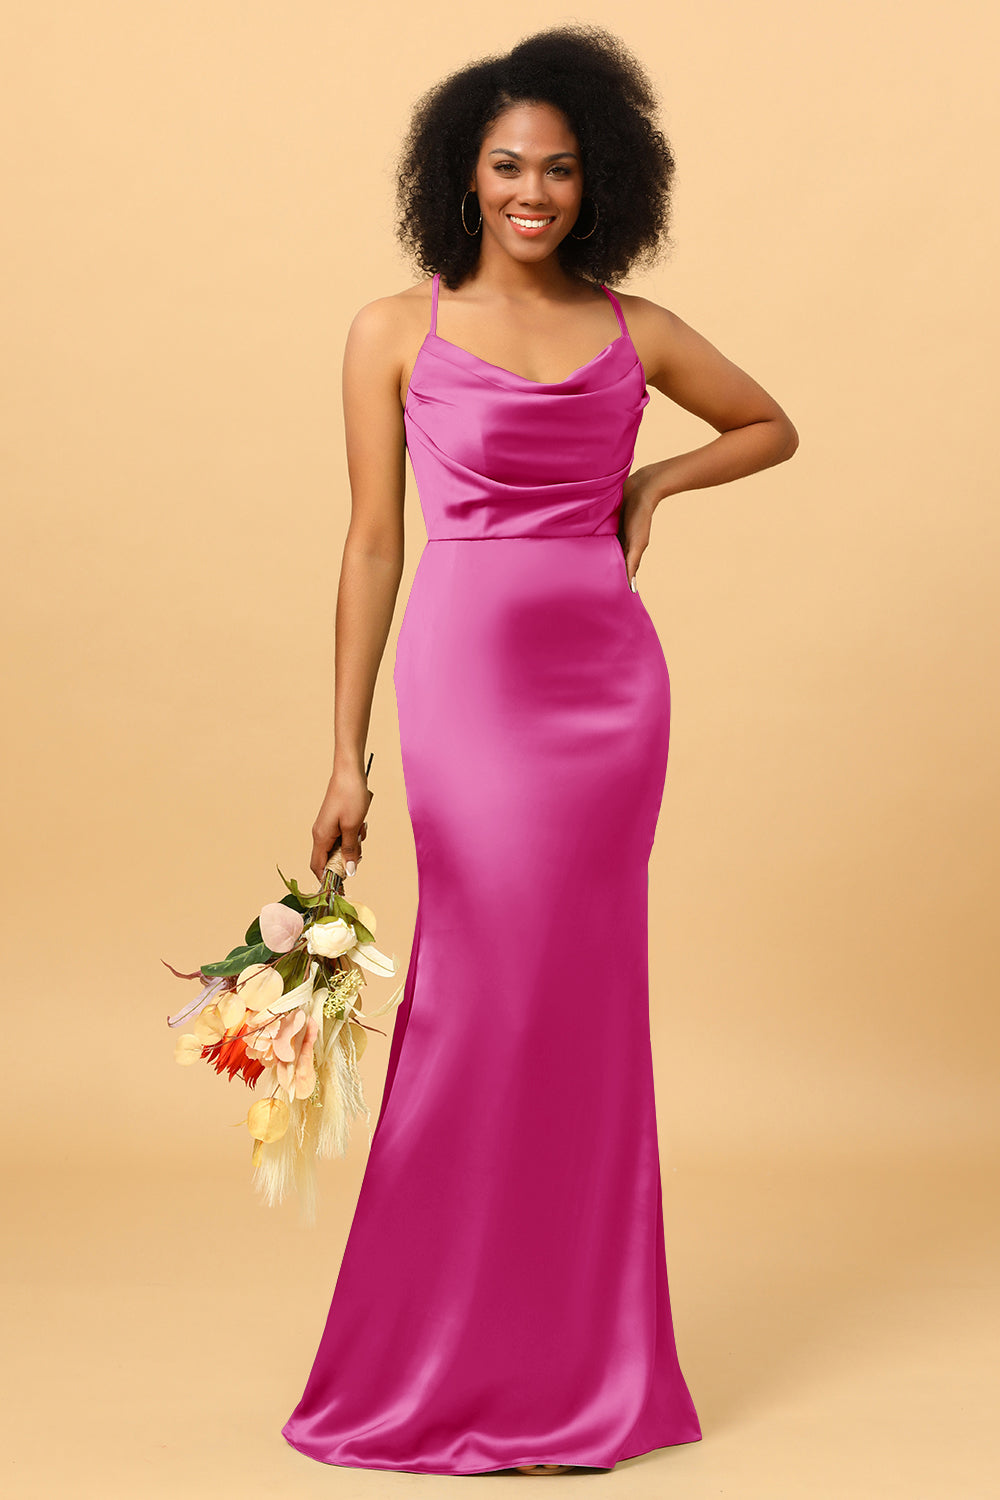 Women's Party Dress U.S. Warehouse Stock Clearance - $49.9